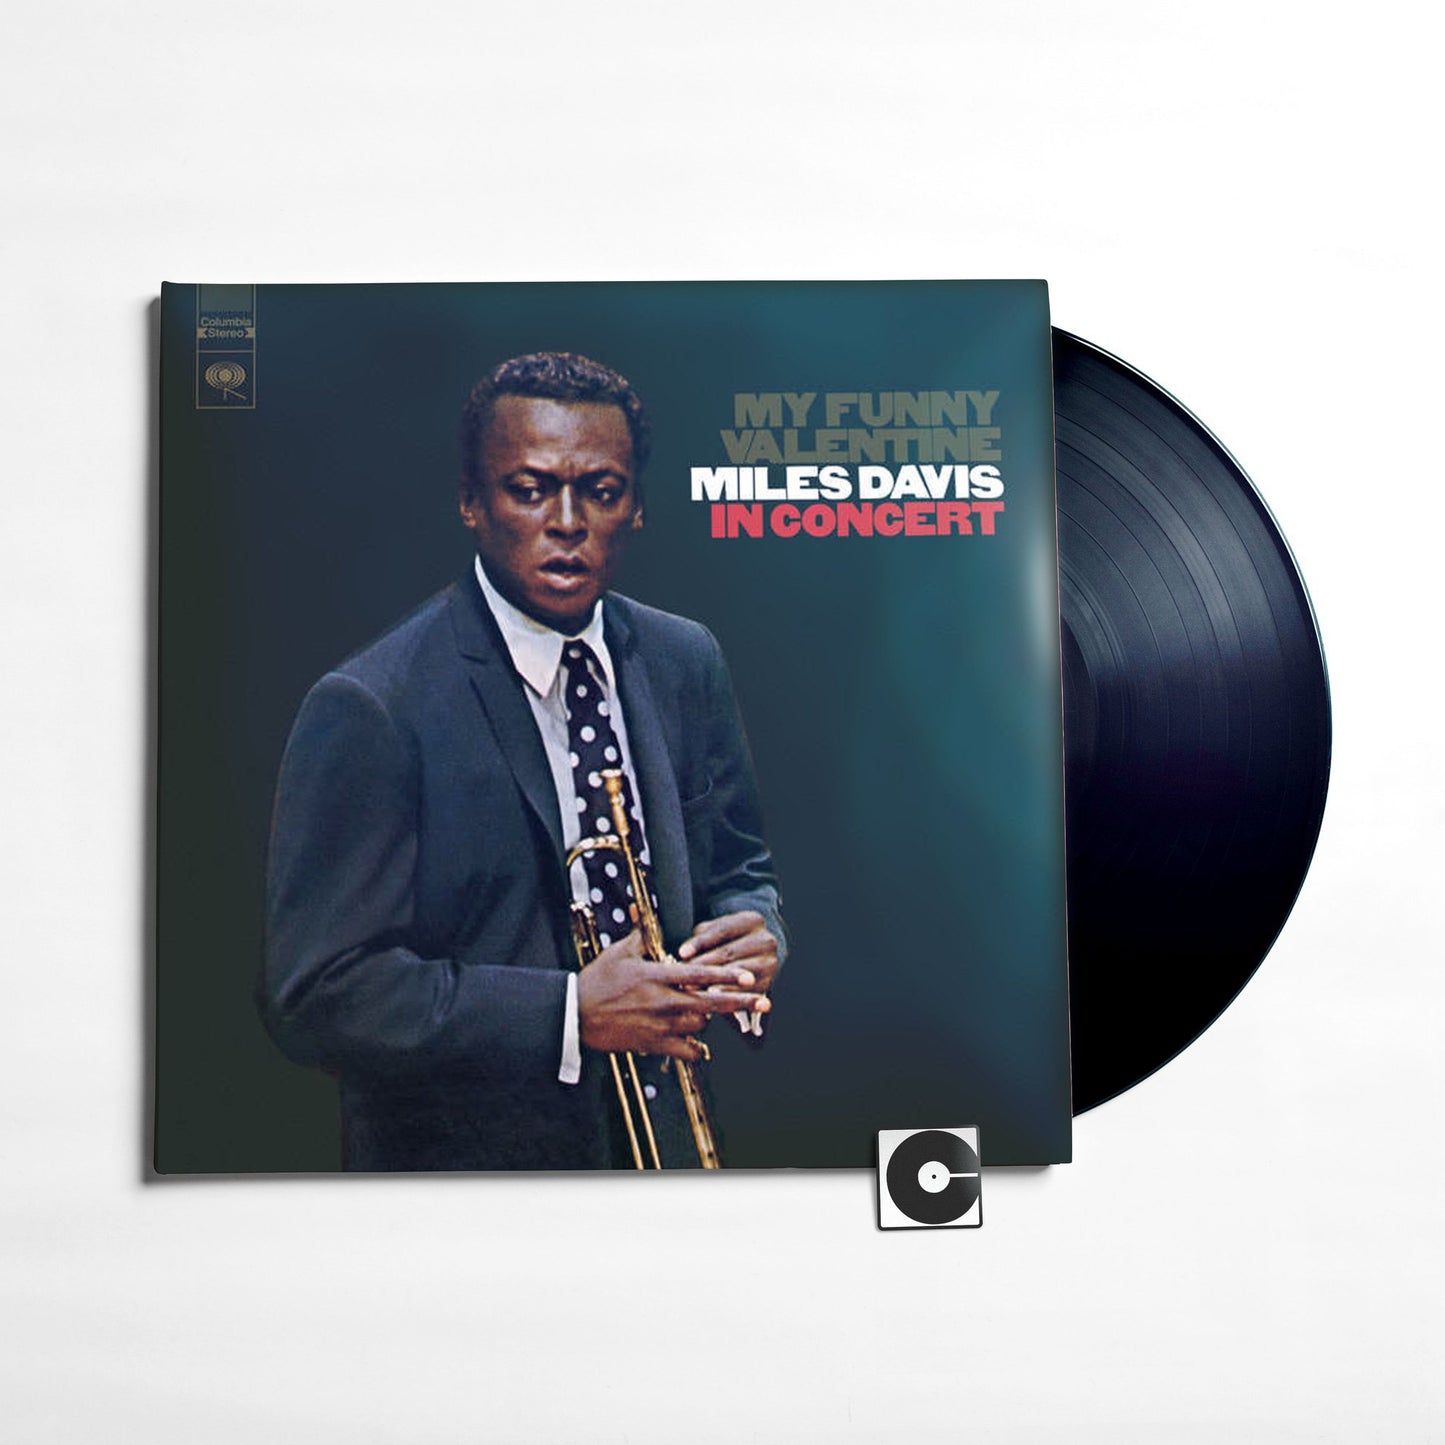 Miles Davis - "My Funny Valentine"